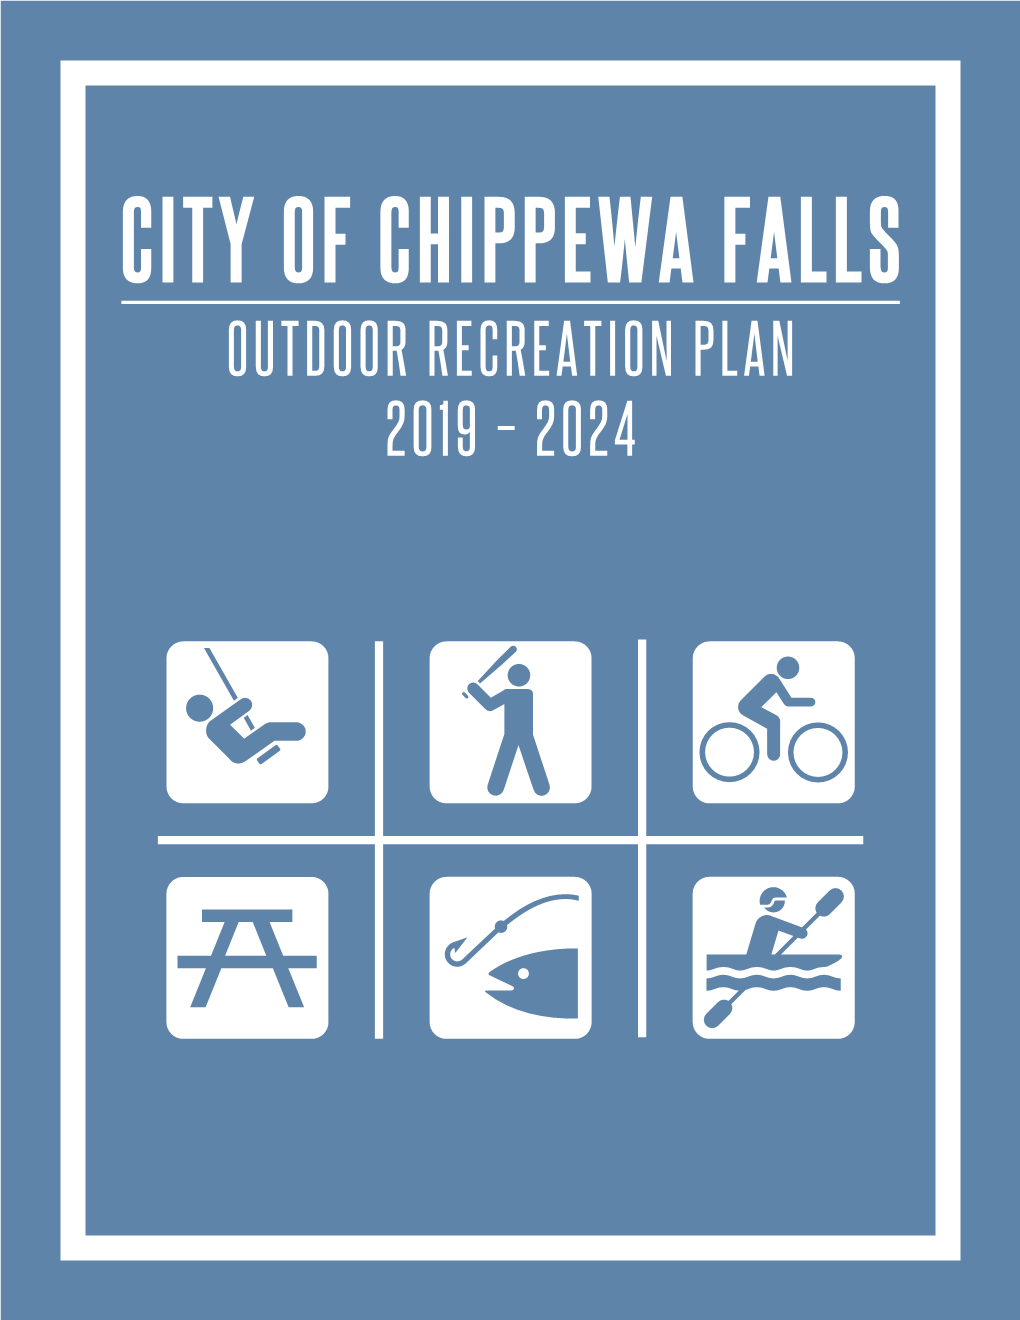 City of Chippewa Falls Outdoor Recreation Plan 2019-2024